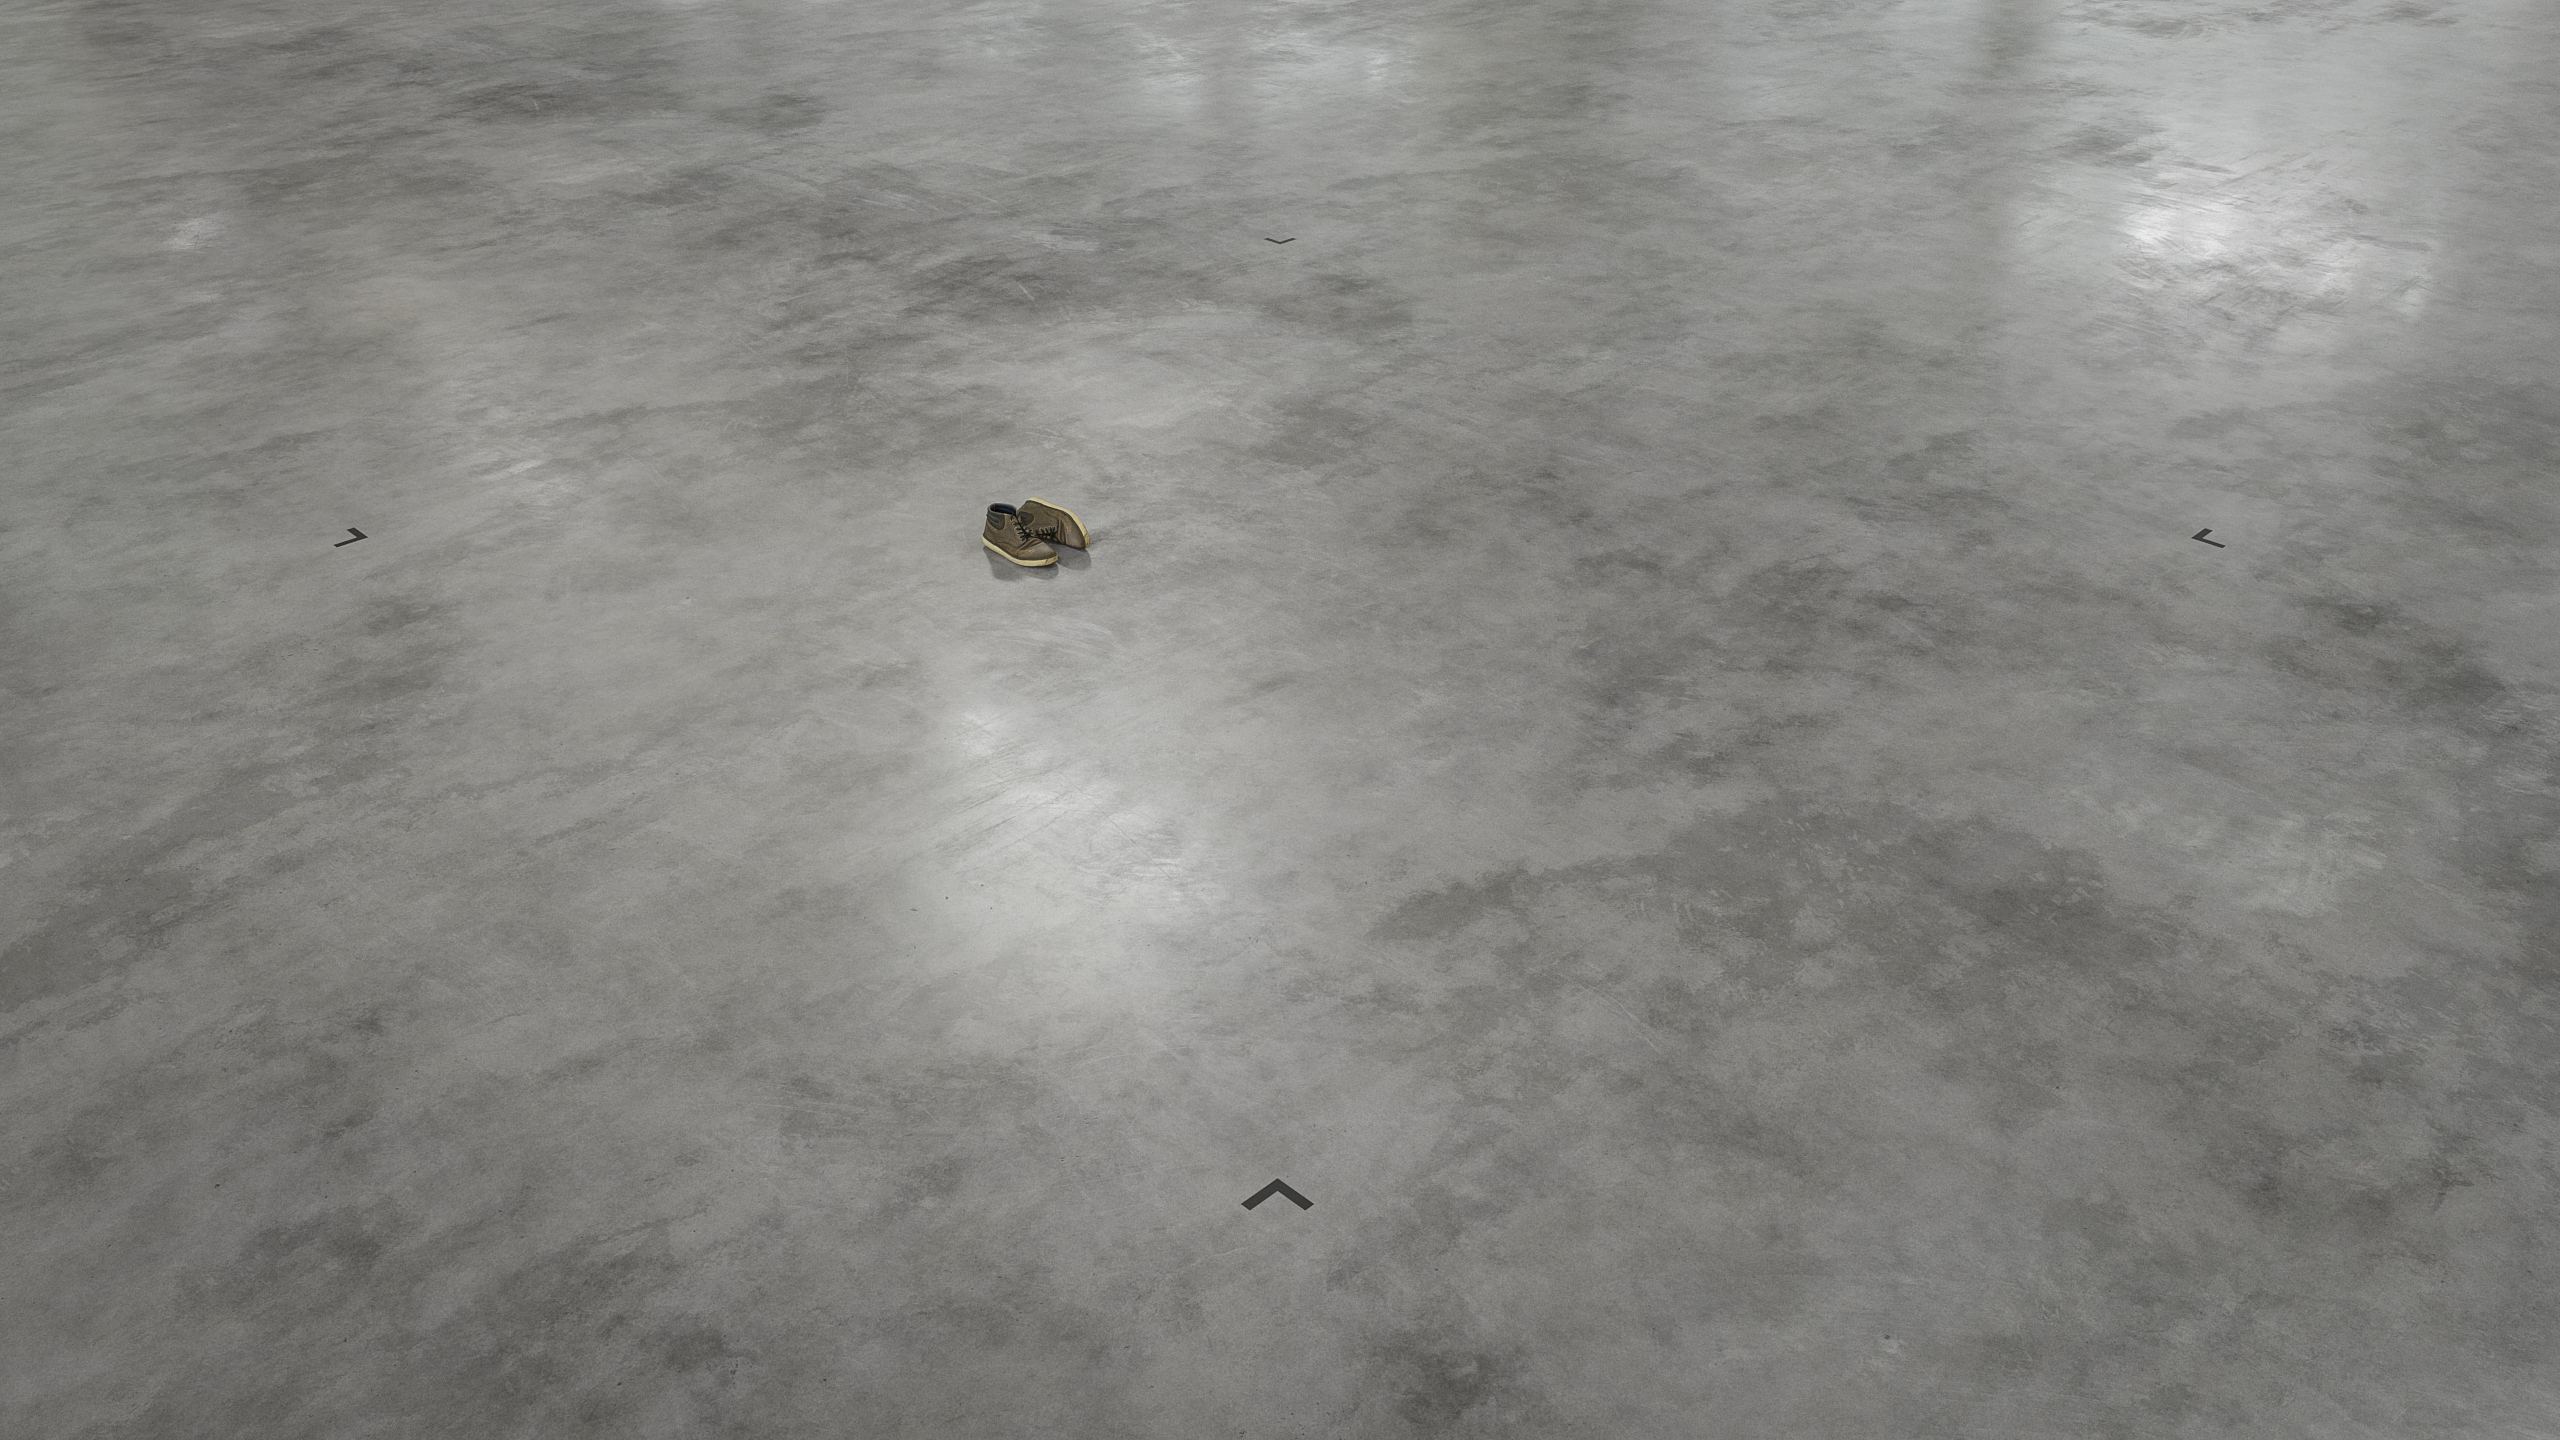 polished concrete floor